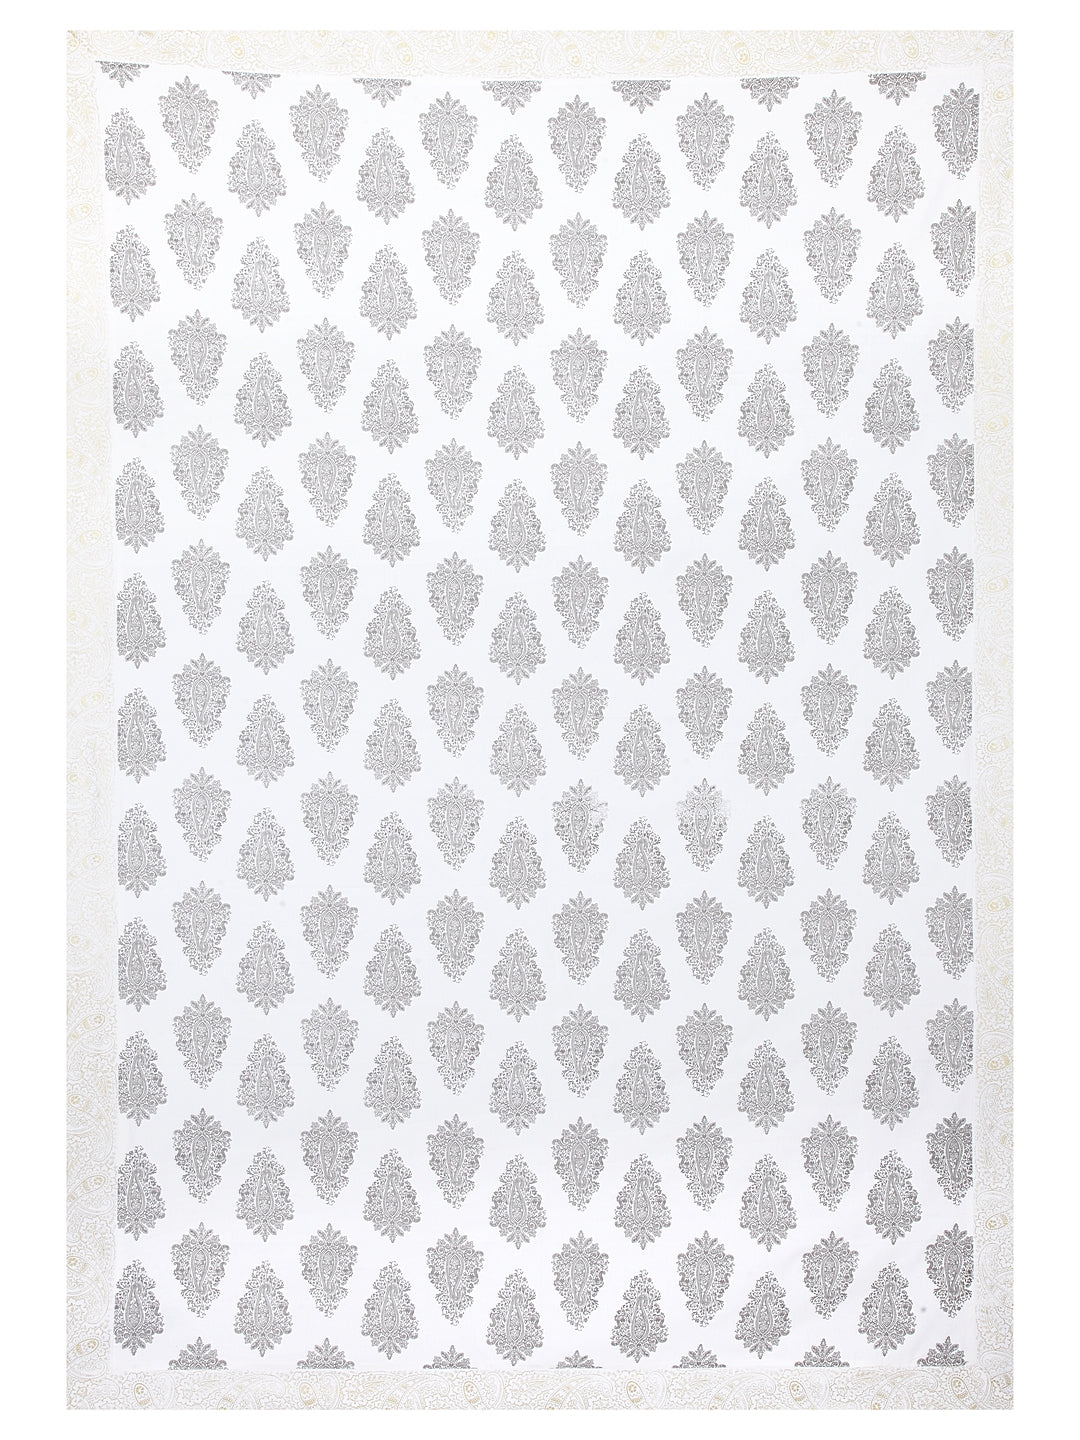 Blanc9 Boteh Block Print Tablecloth